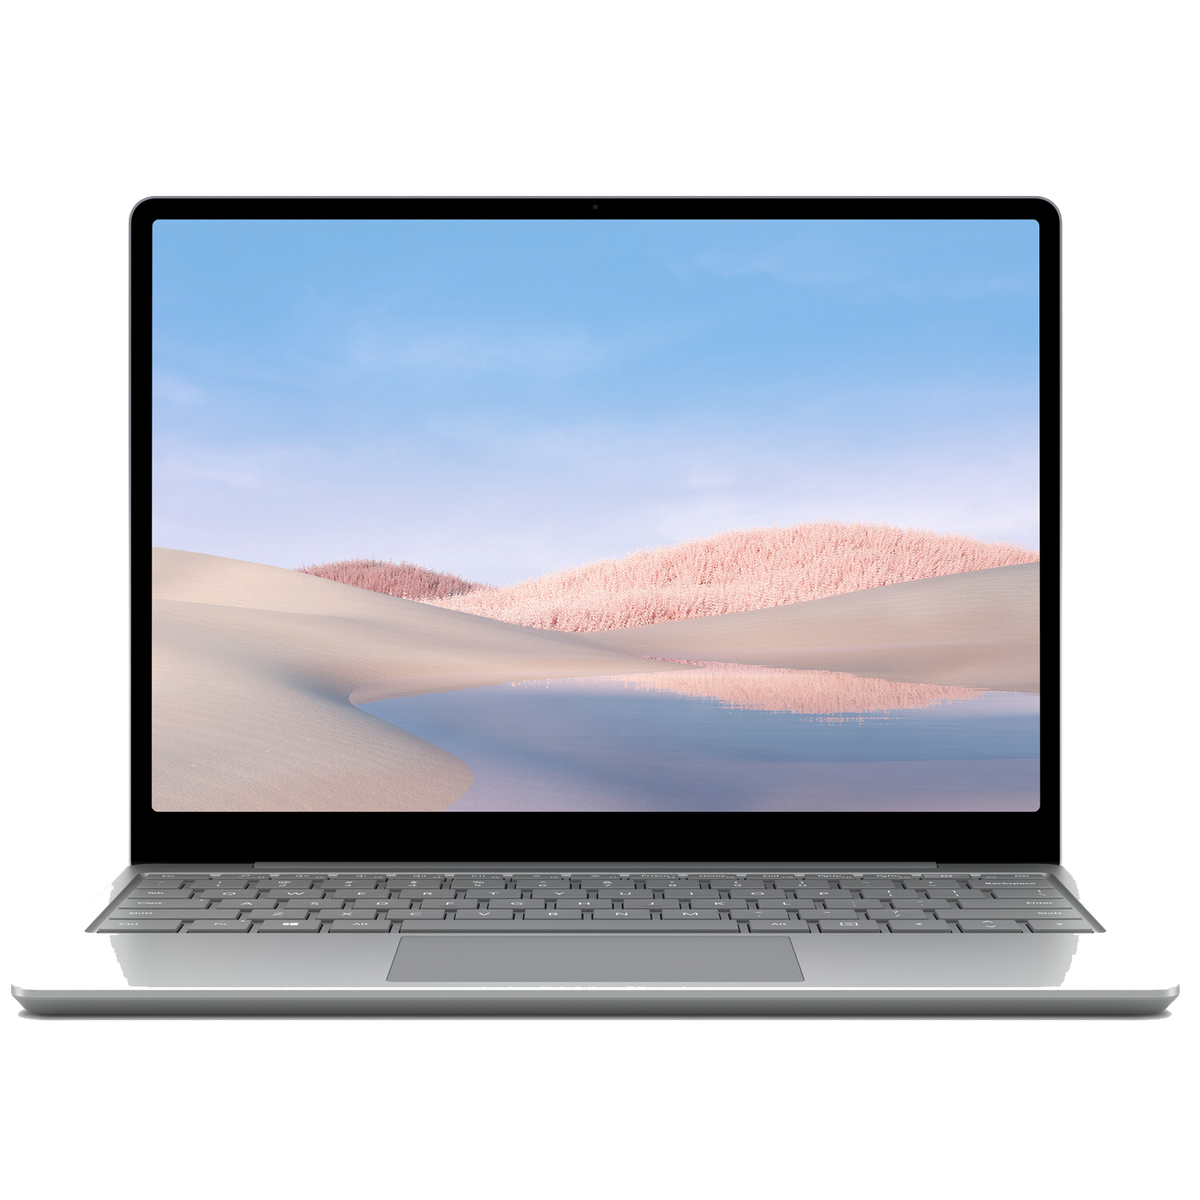 Microsoft Surface Laptop Go 12.45" i5-1035G1 4/64GB silber - Onhe Vertrag